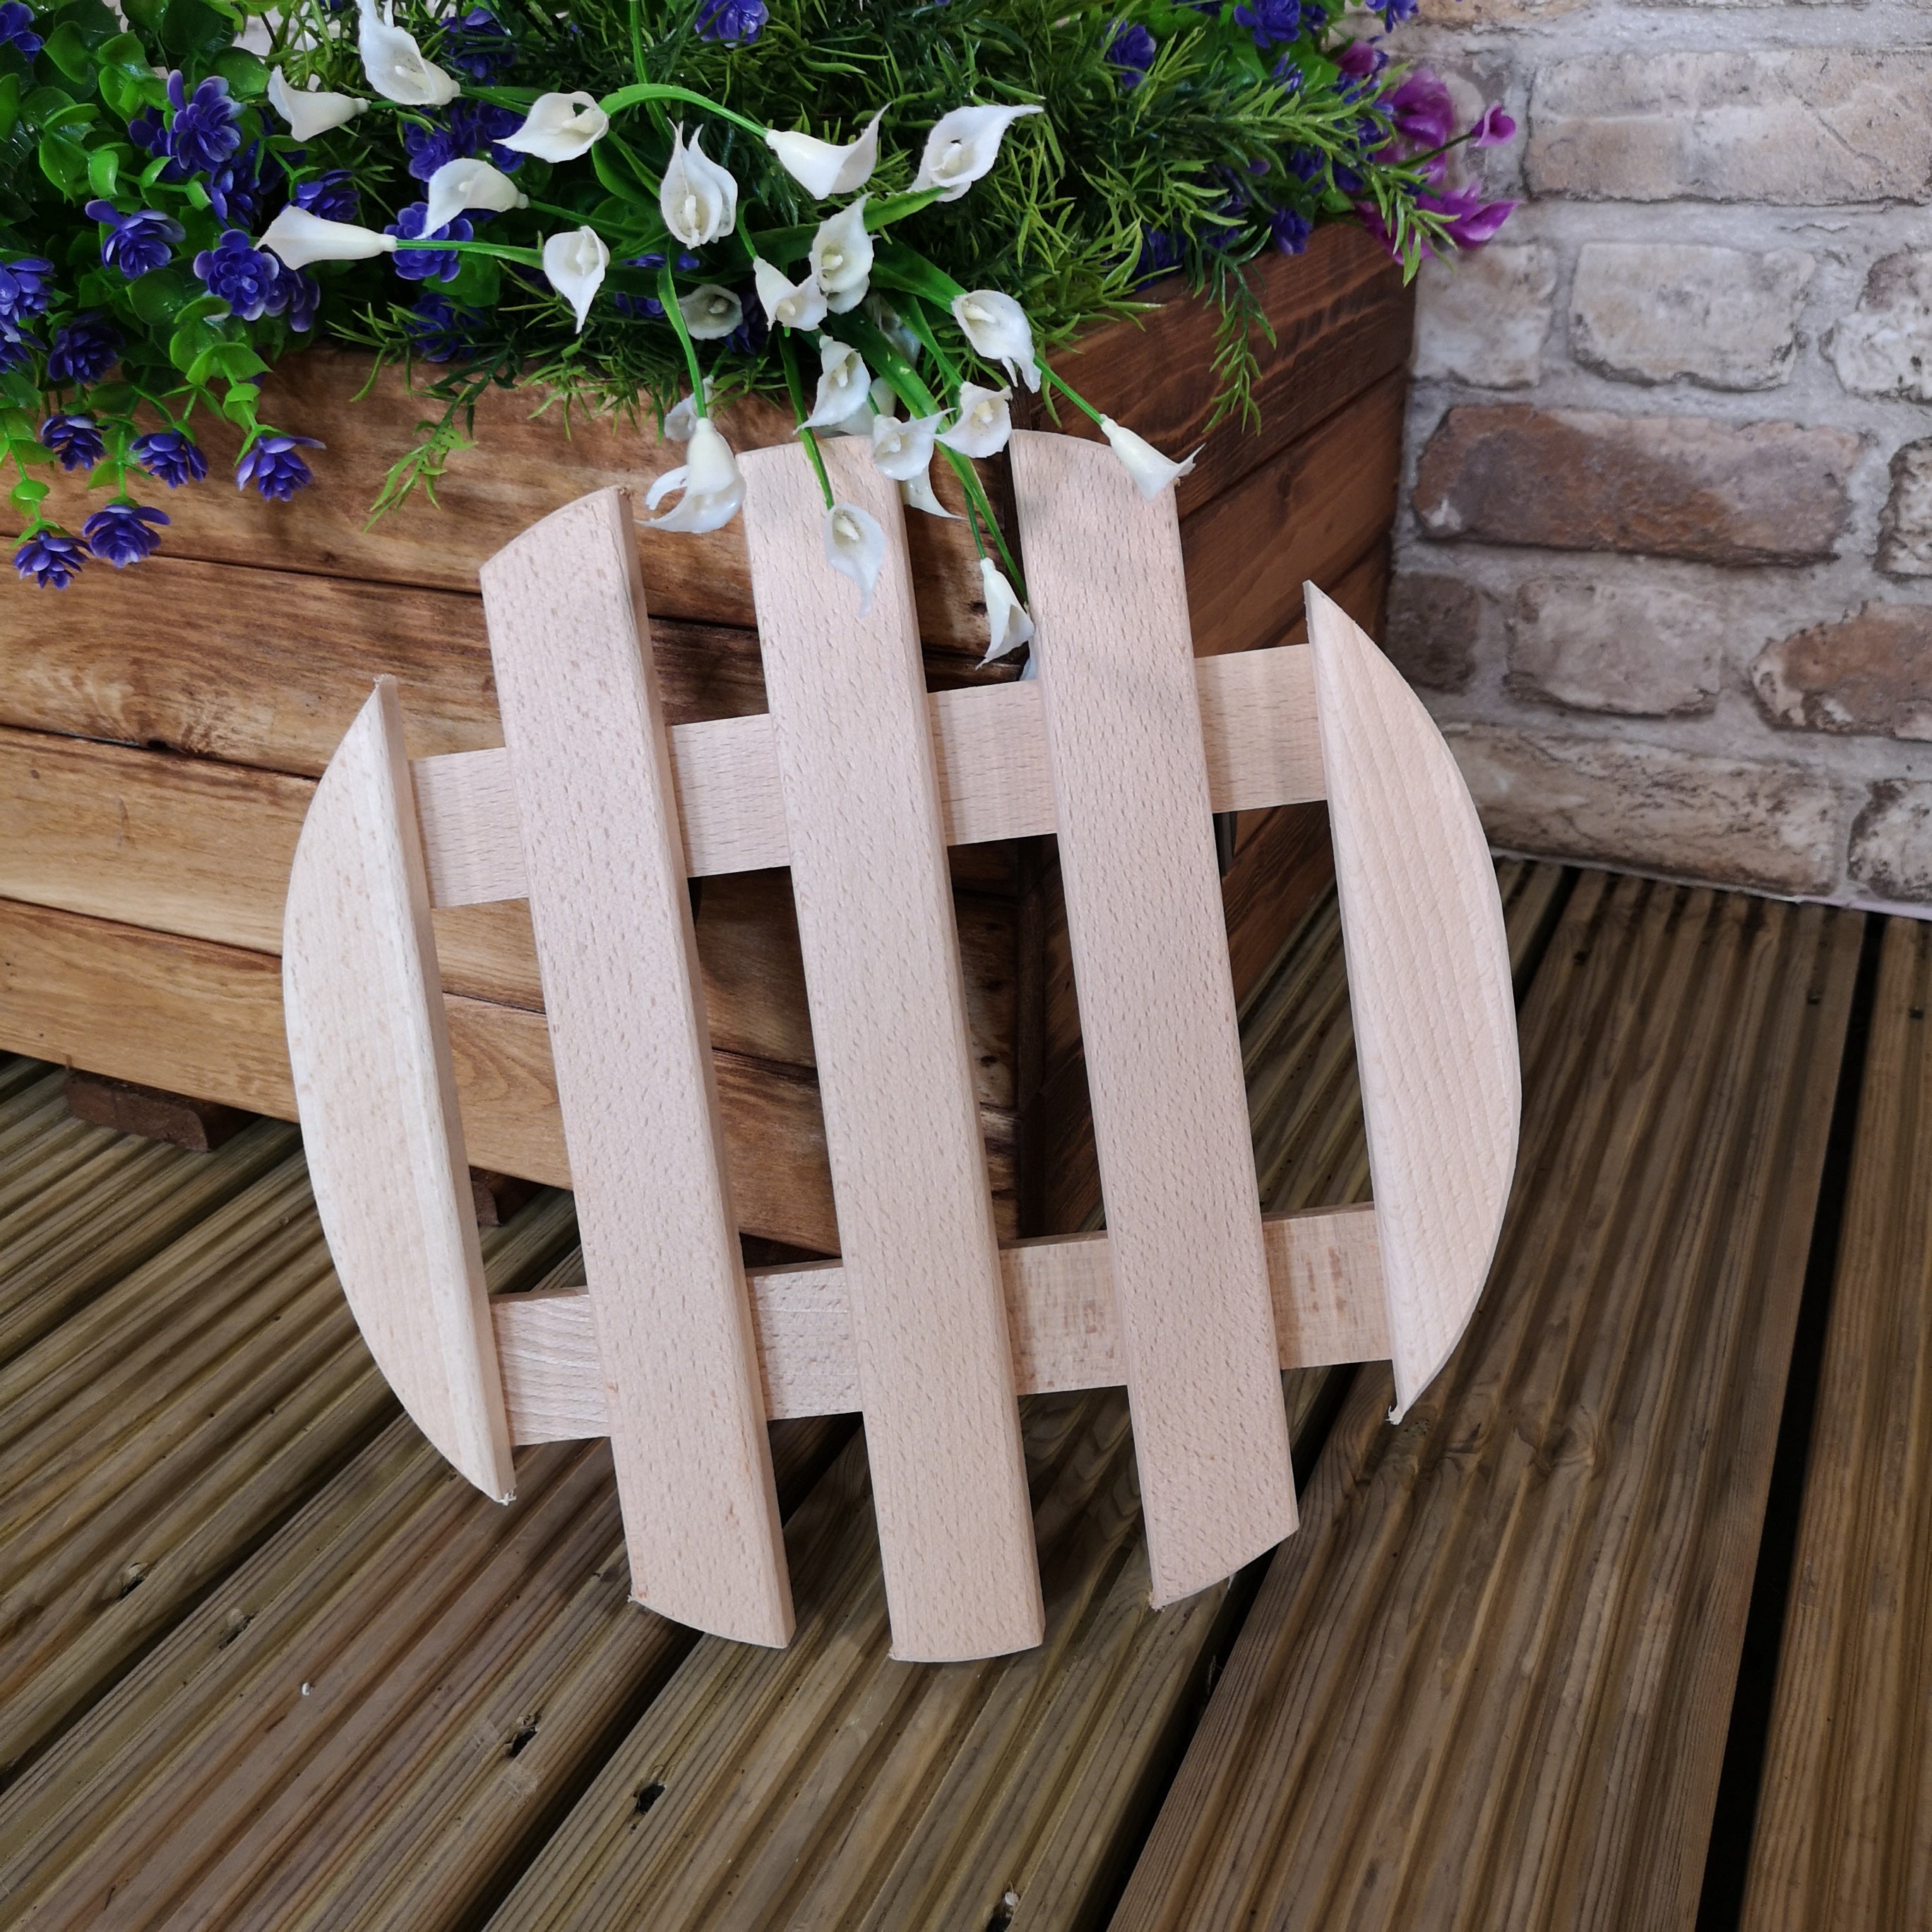 Round Wooden Garden Patio Plant Flower Pot Stand Caddy/Trolley on Castor Wheels Ø 30cm